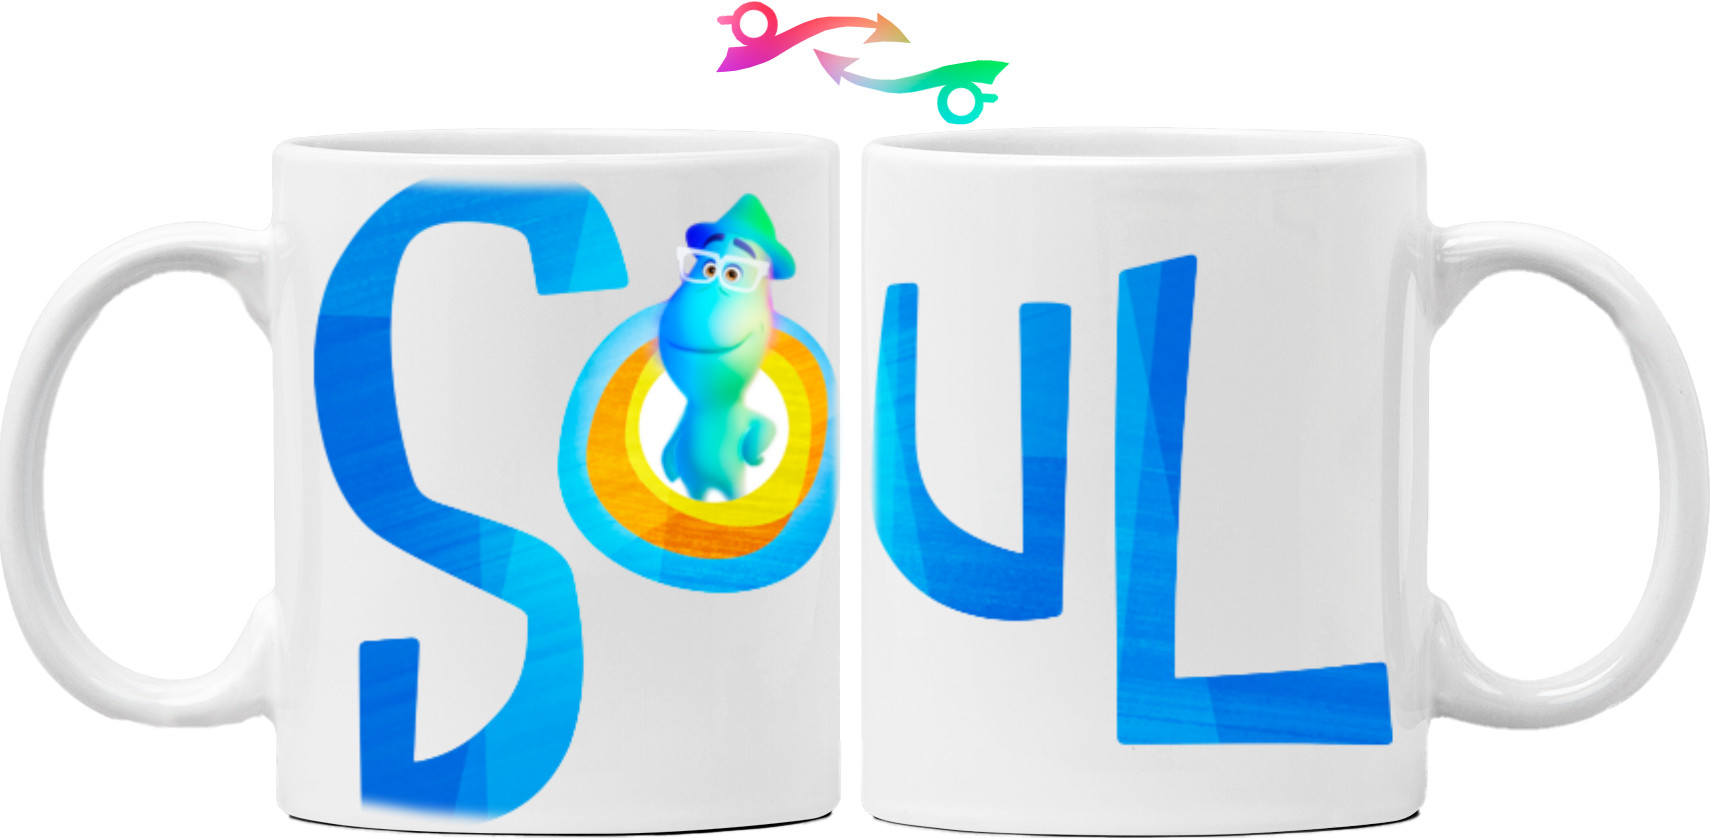 Душа / Soul